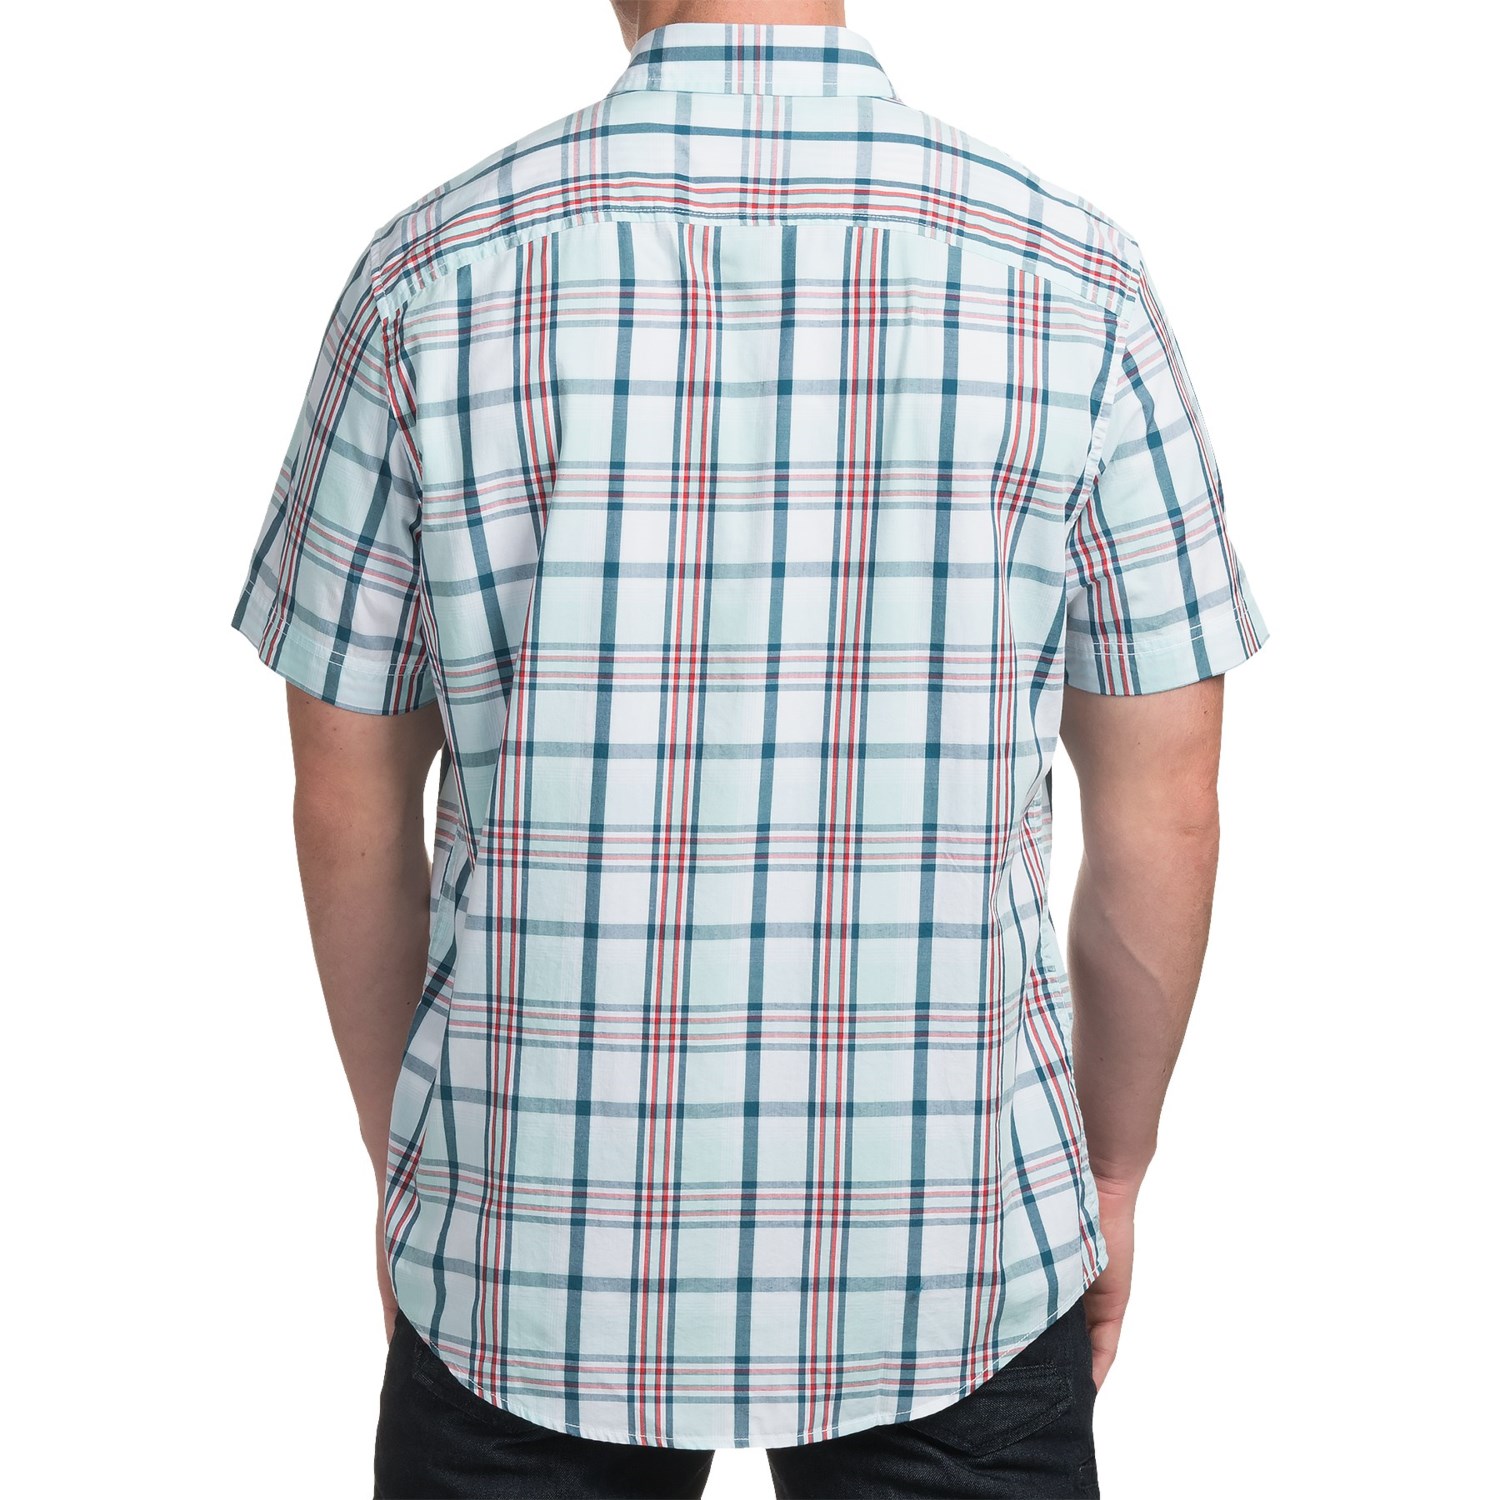 Timberland Large Check Shirt (For Men) - Save 58%